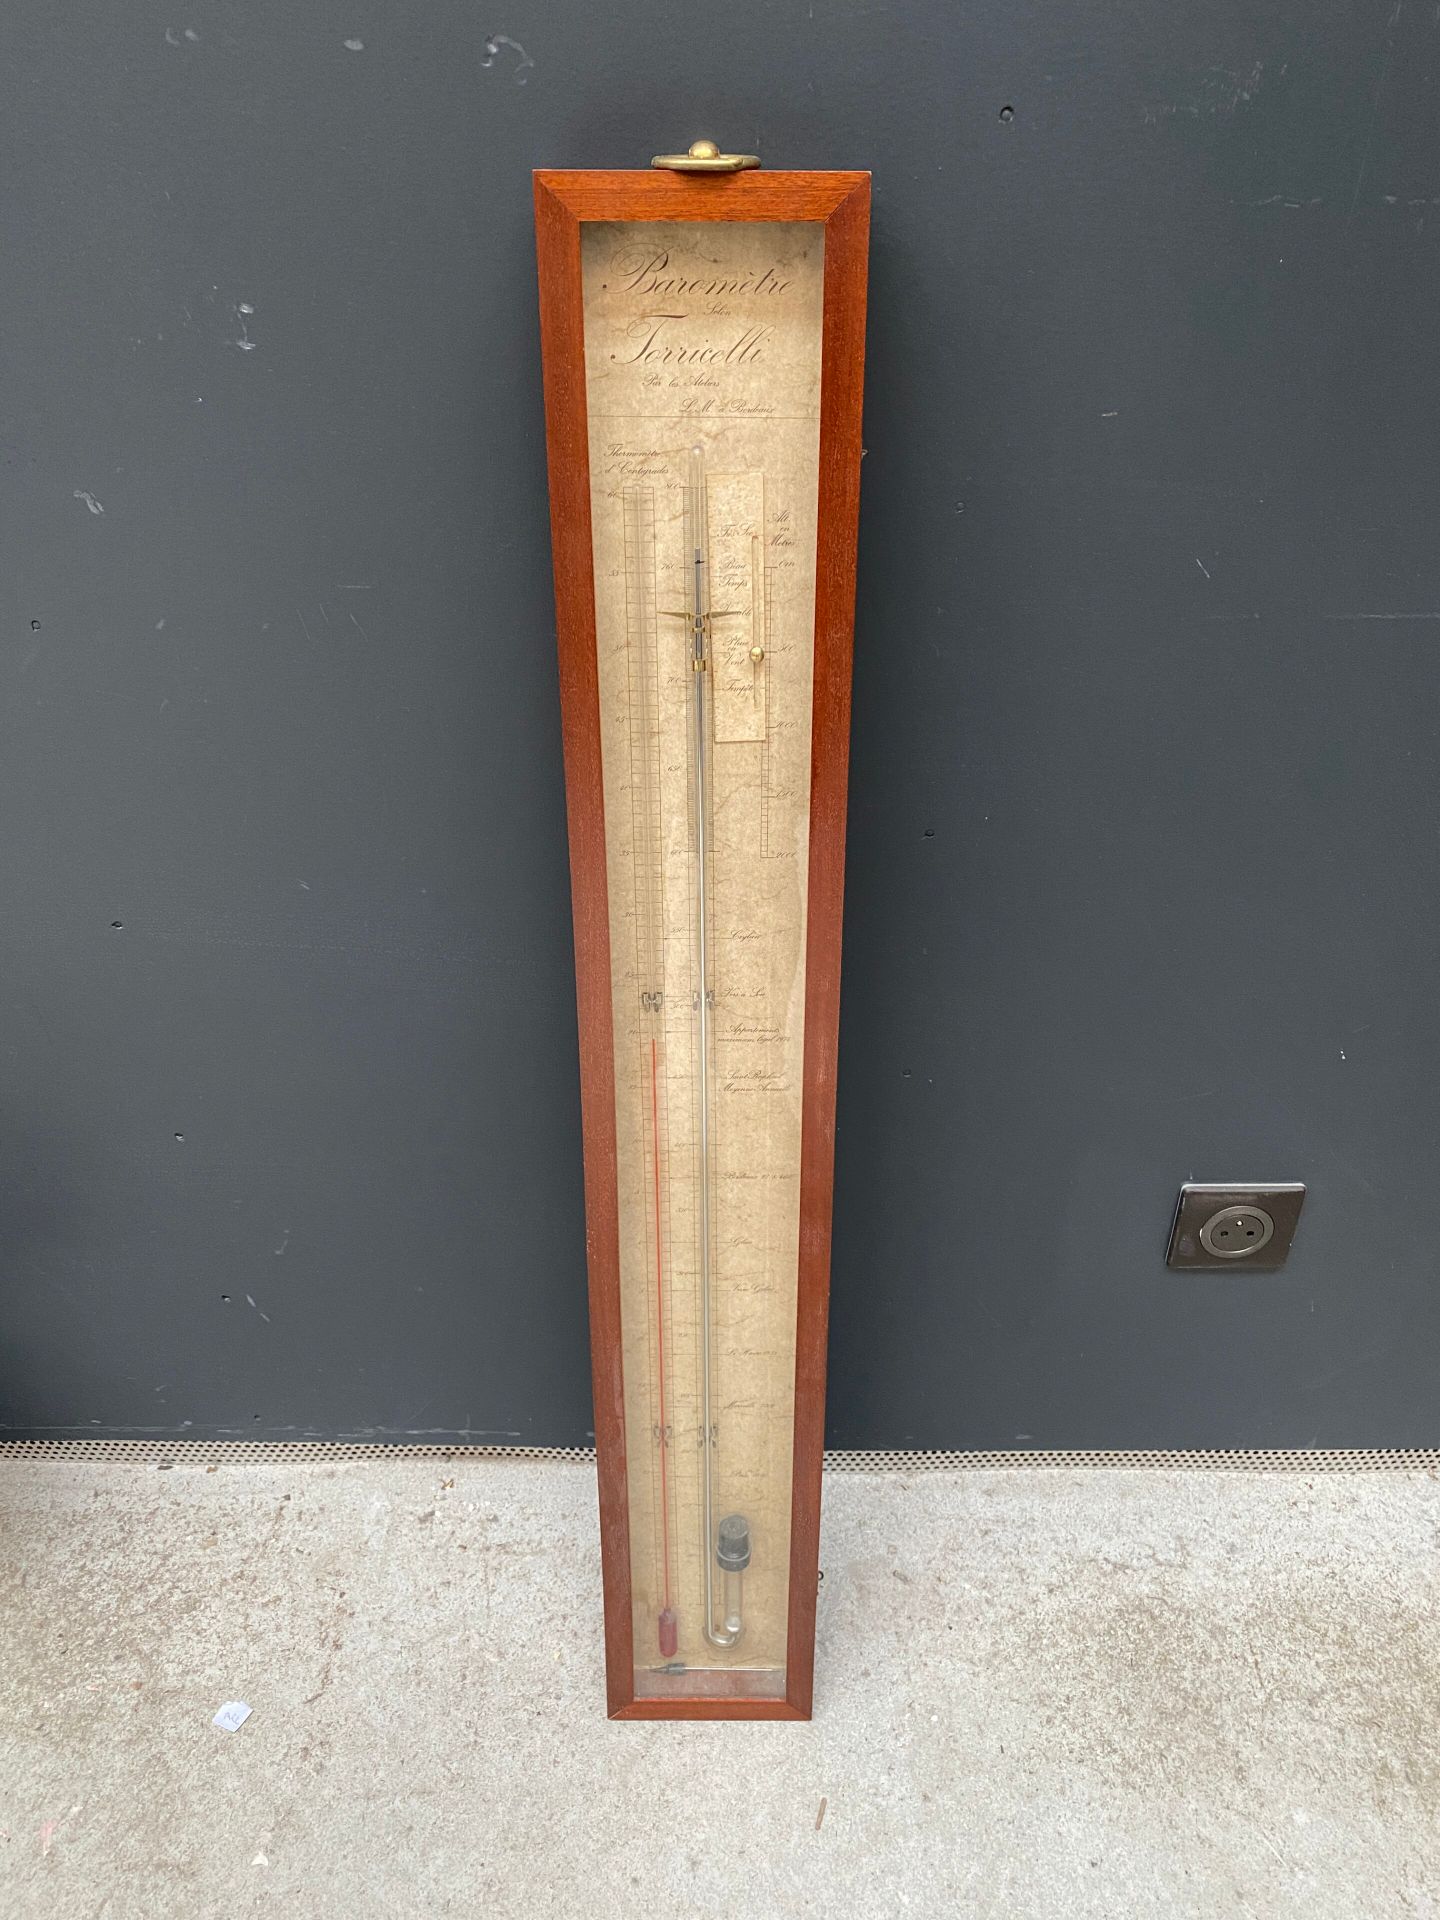 Null Baromètre - thermomètre Torricelli

107 x 15 cm